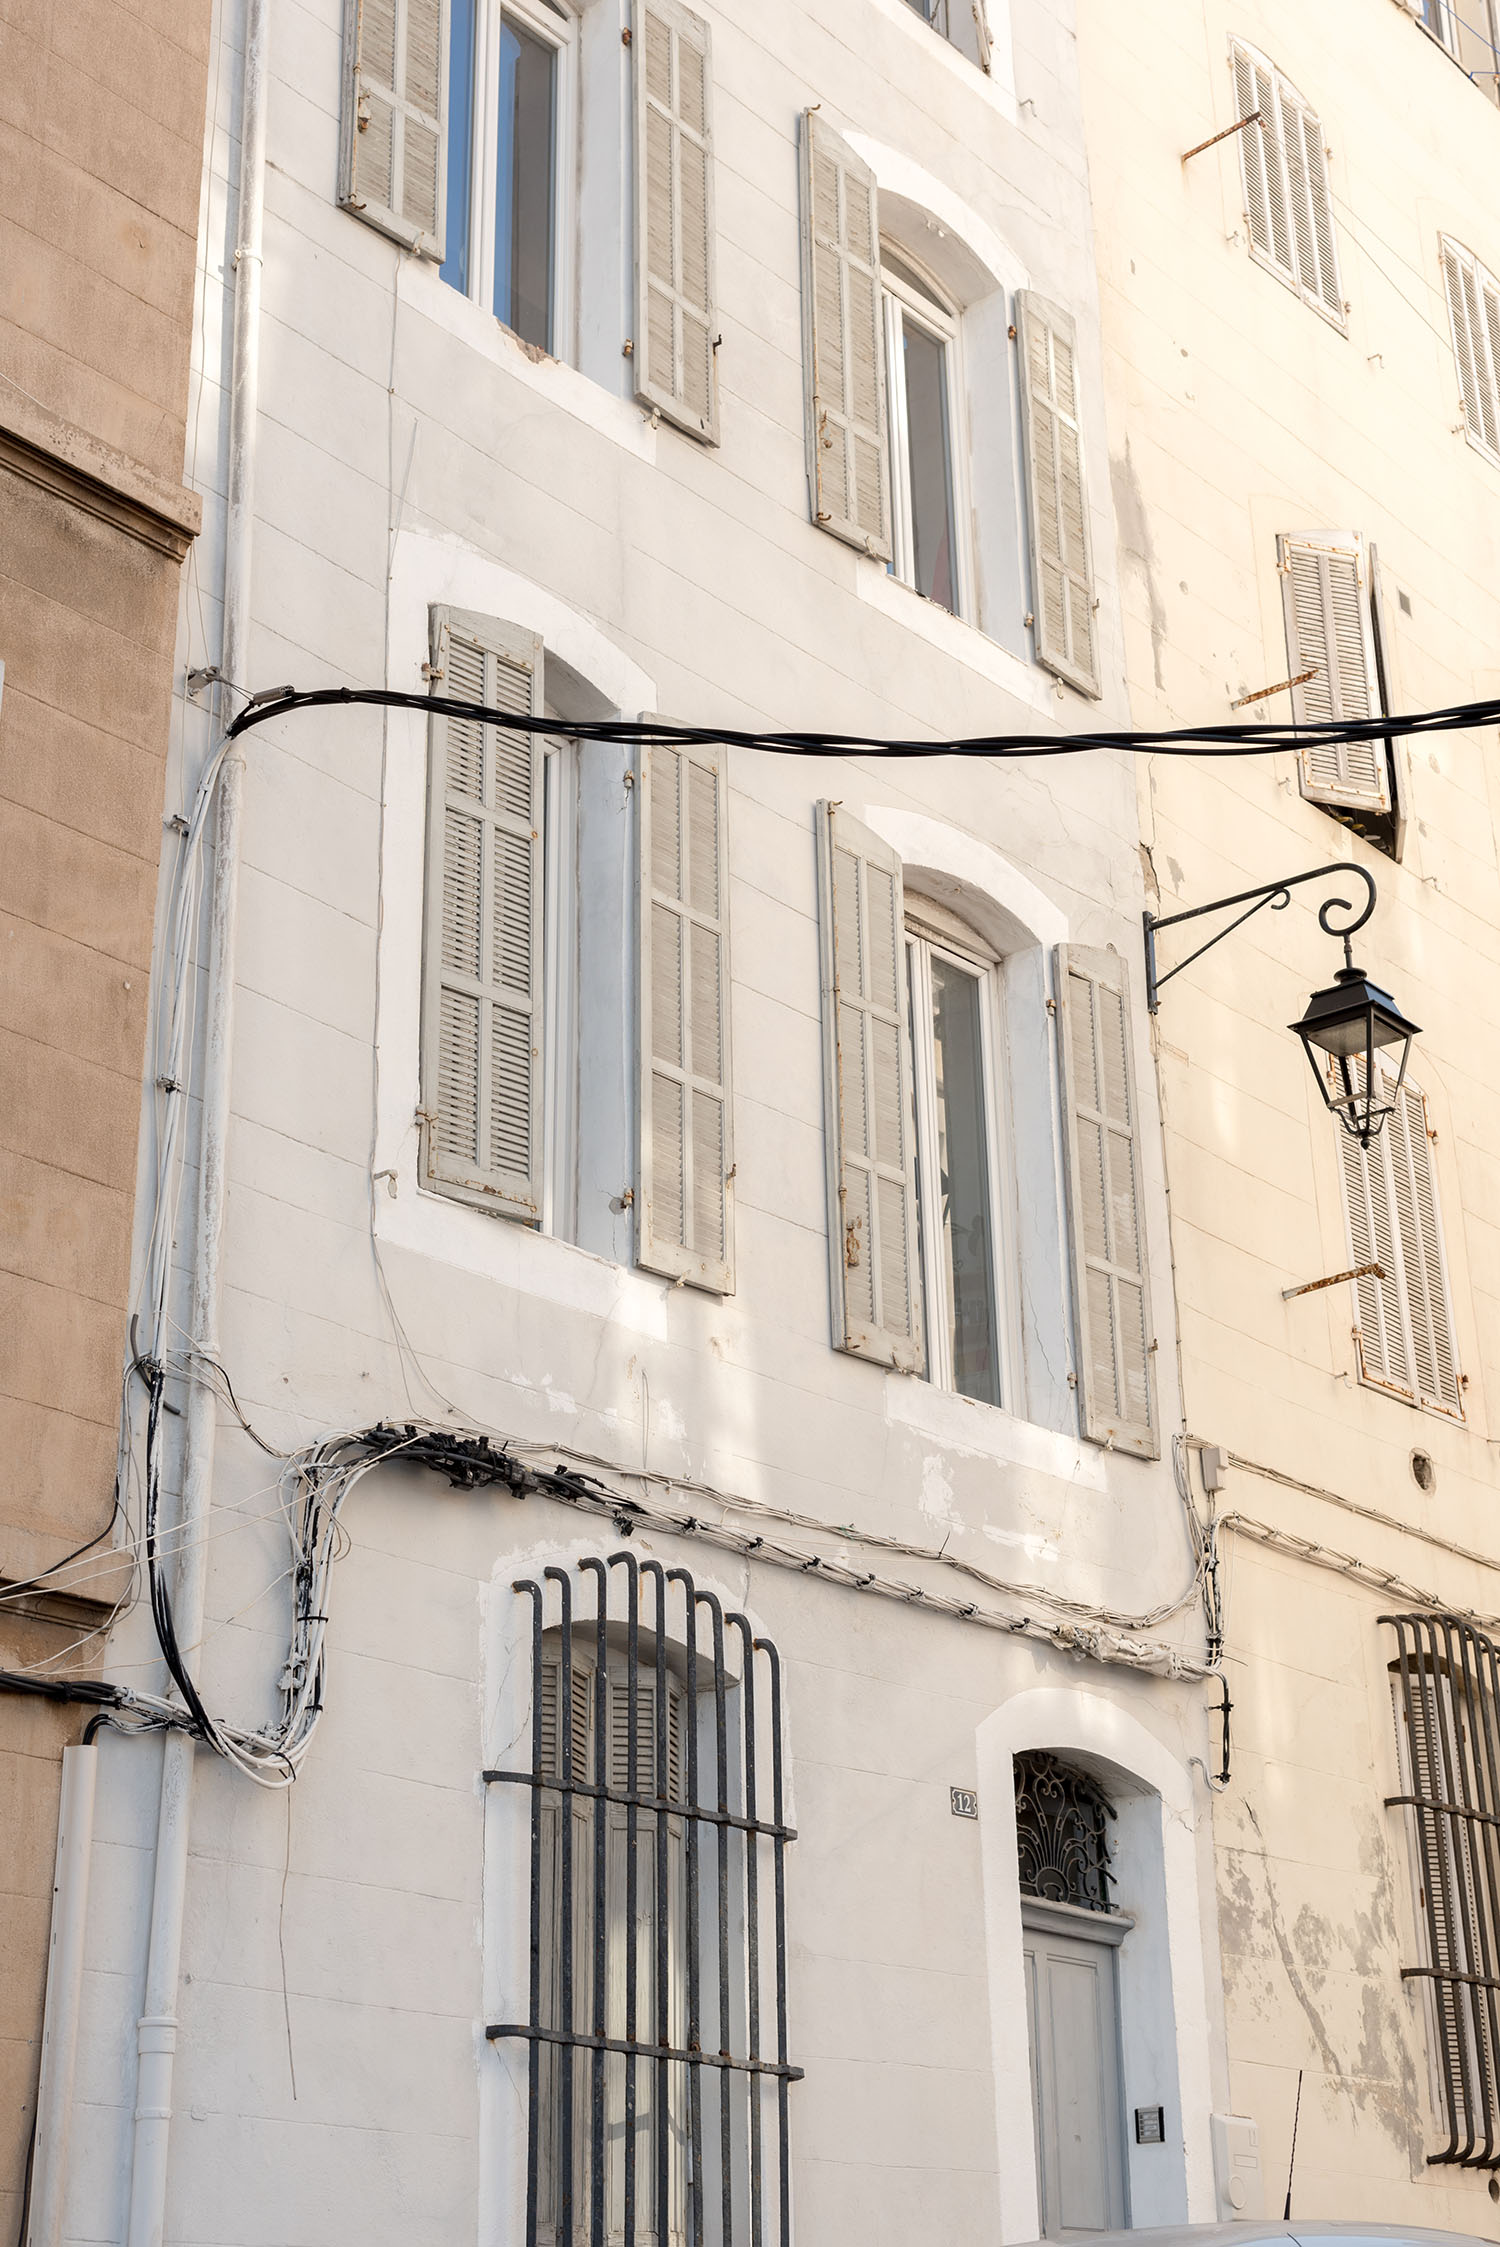 Coco & Vera - Historic buildings in Le Panier, Marseille